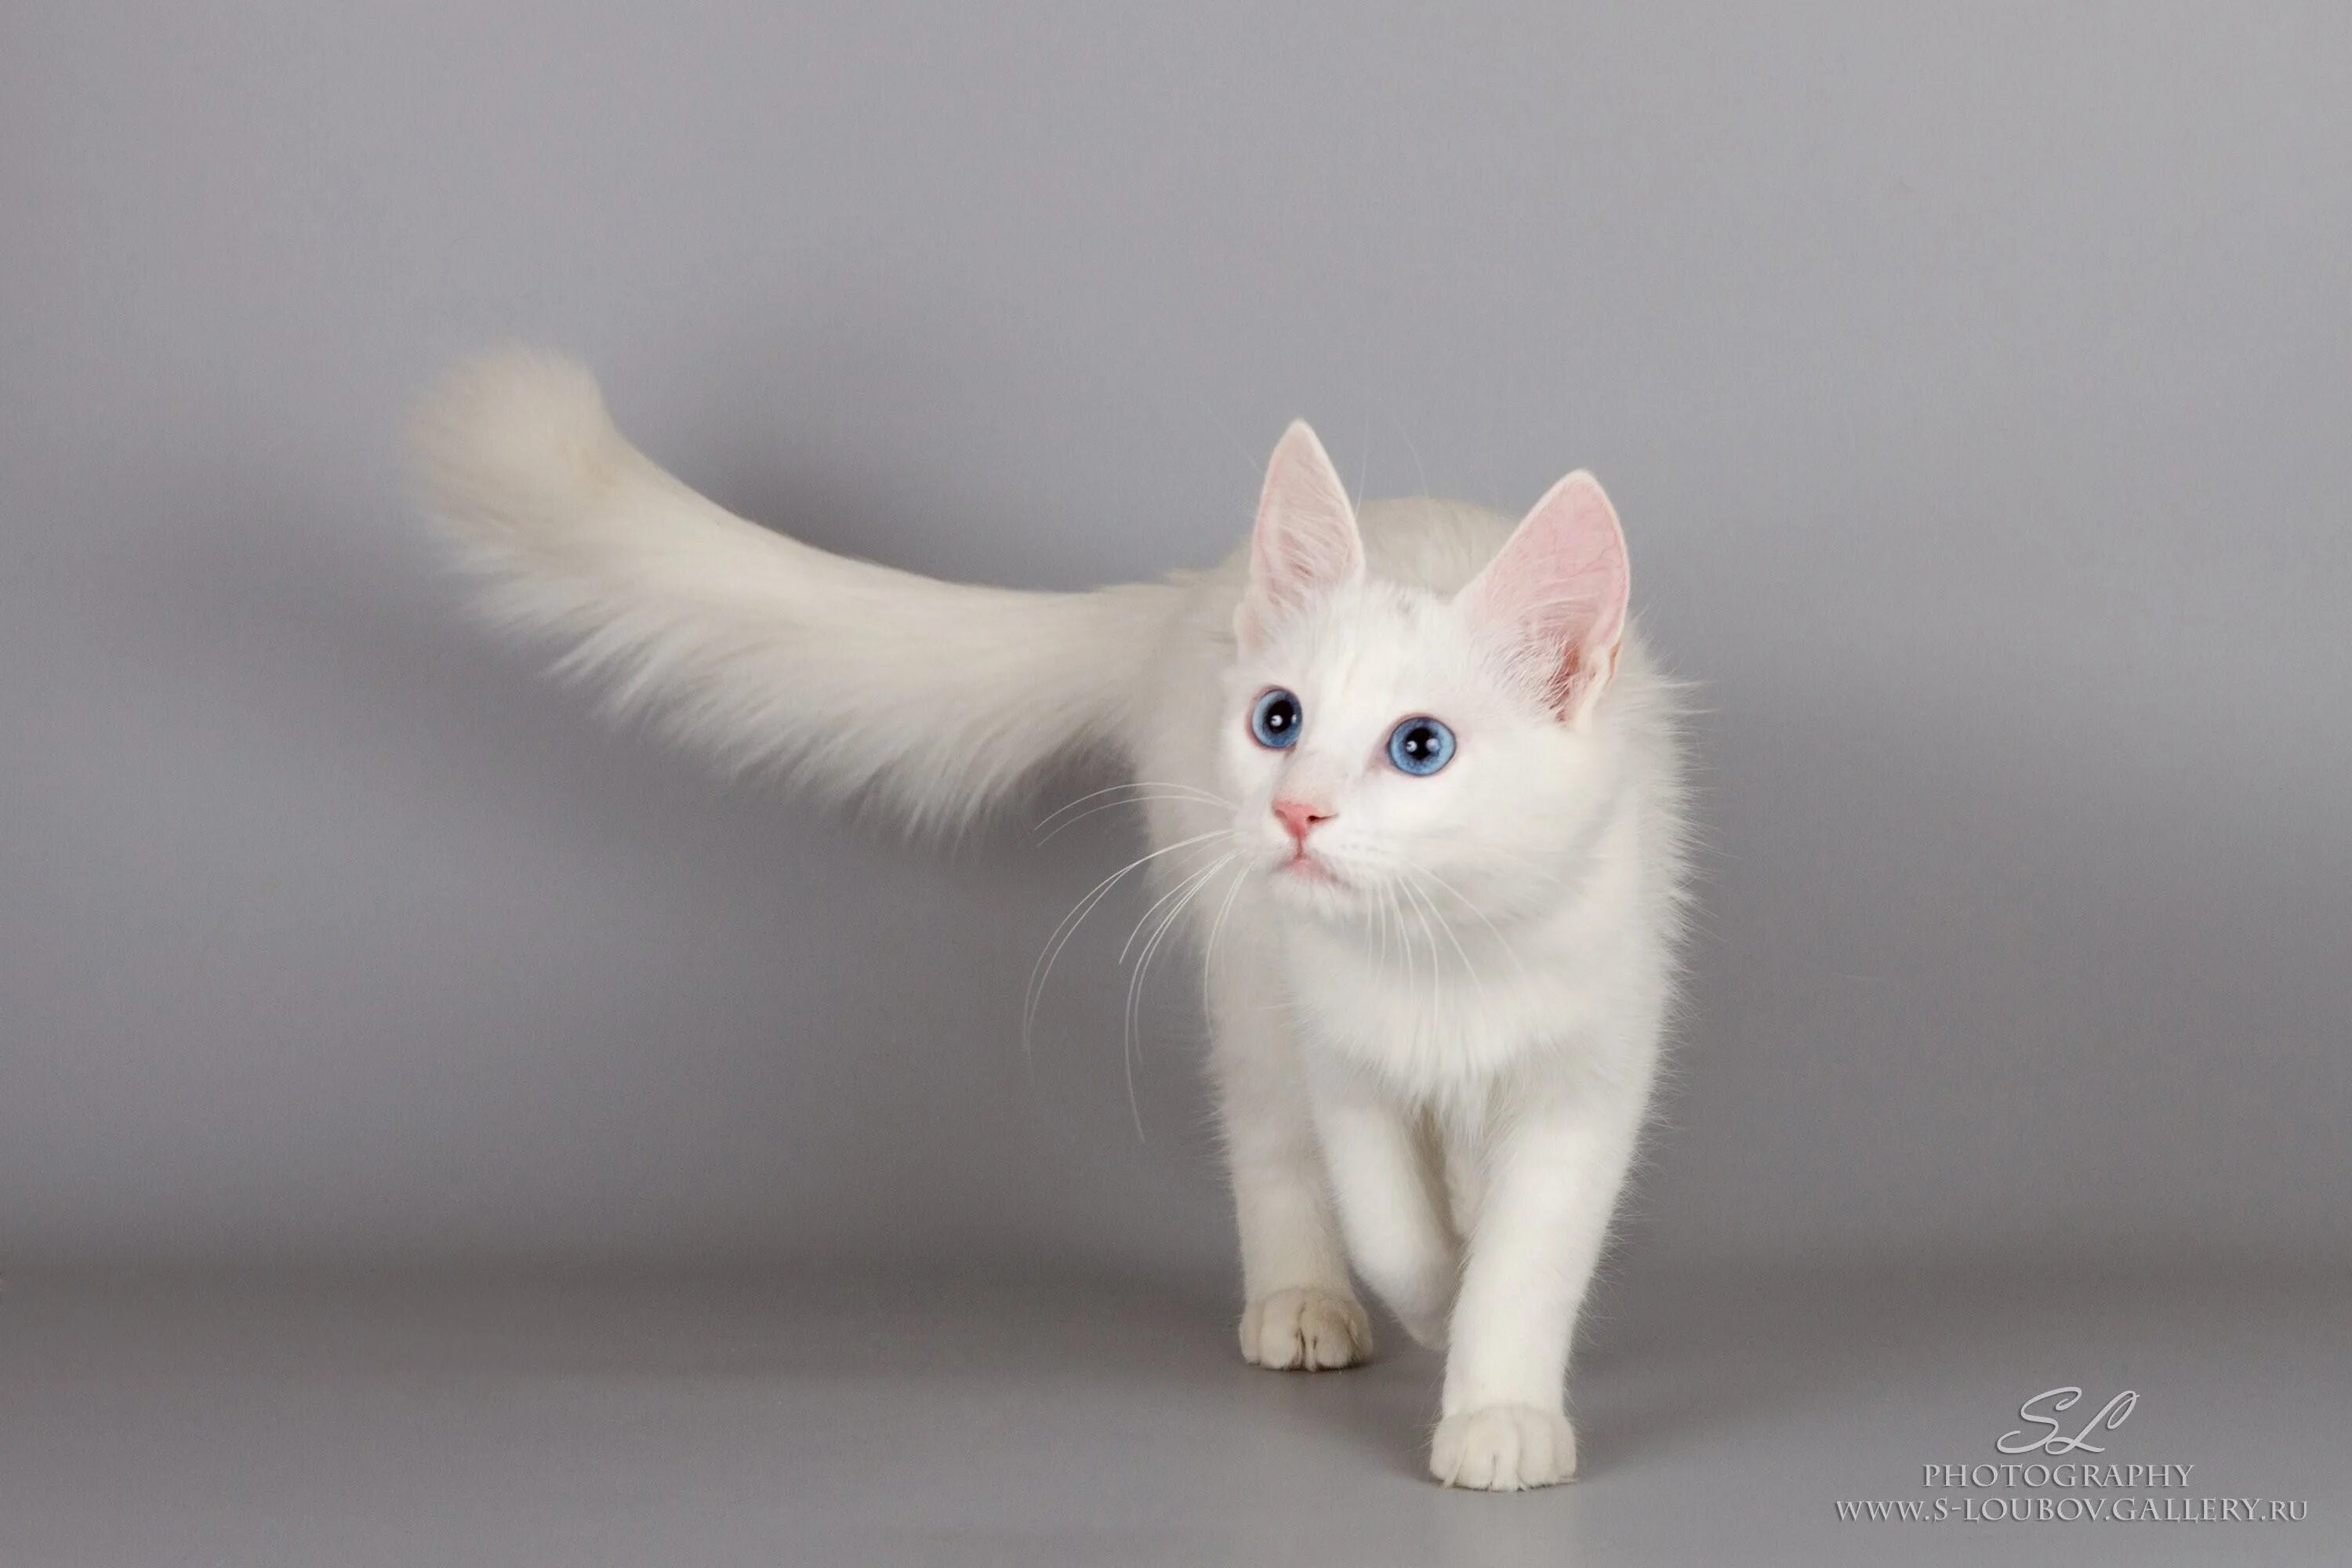 Турецкая ангора белая. Турецкая ангора кошка. Турецкая ангорская кошка. Белая ангорская кошка.